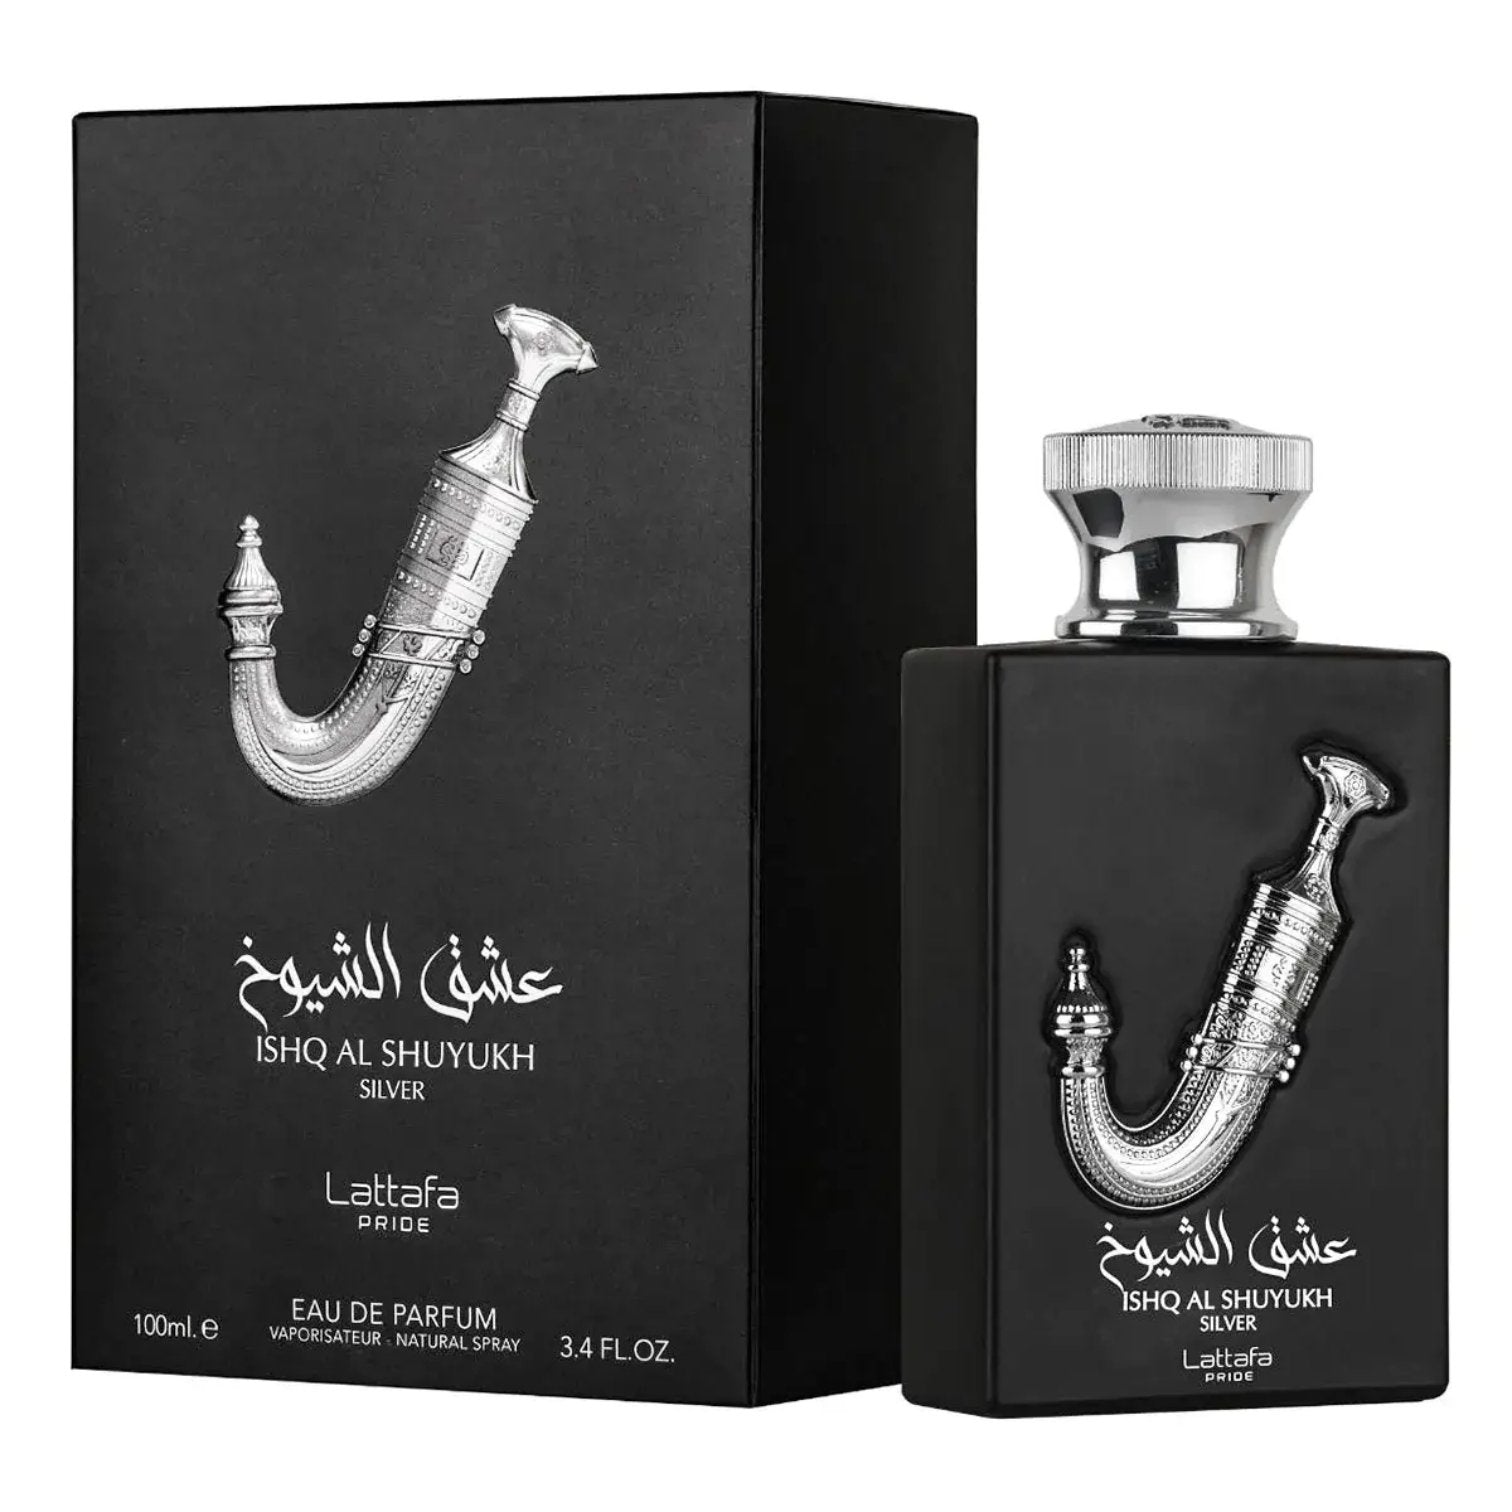 Ishq Al Shuyukh Silver 100ml EDP from Lattafa's Luxury Range